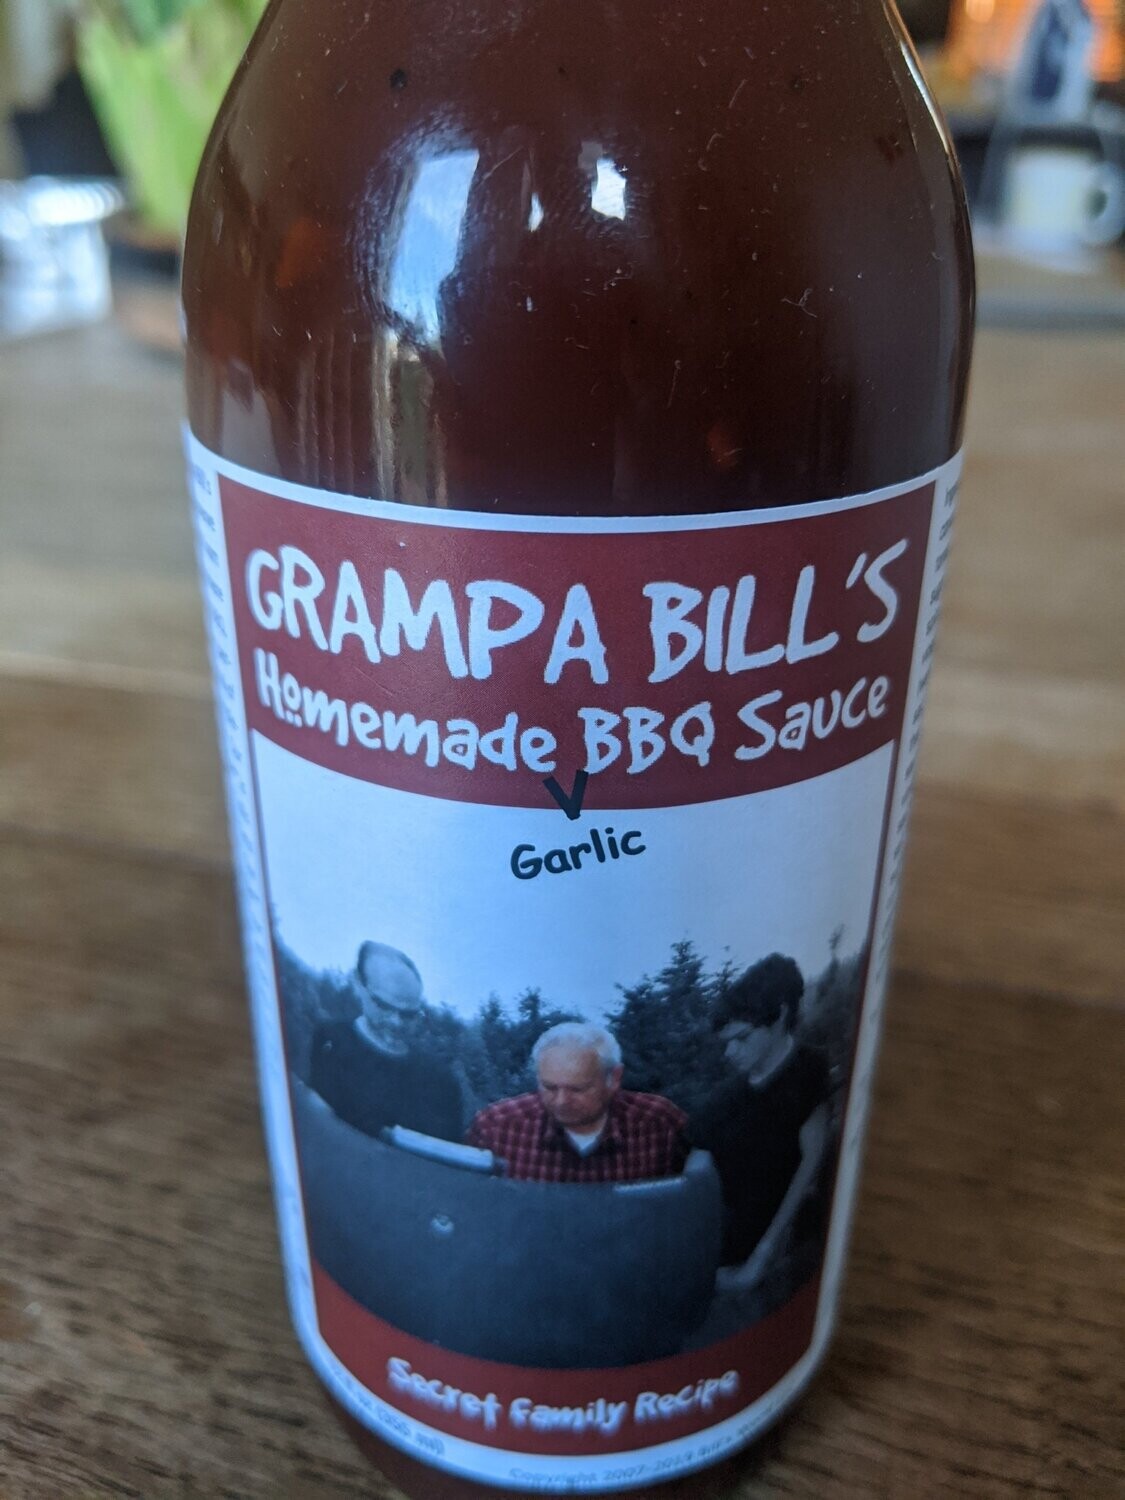 Grampa Bill's BBQ Sauce - Garlic